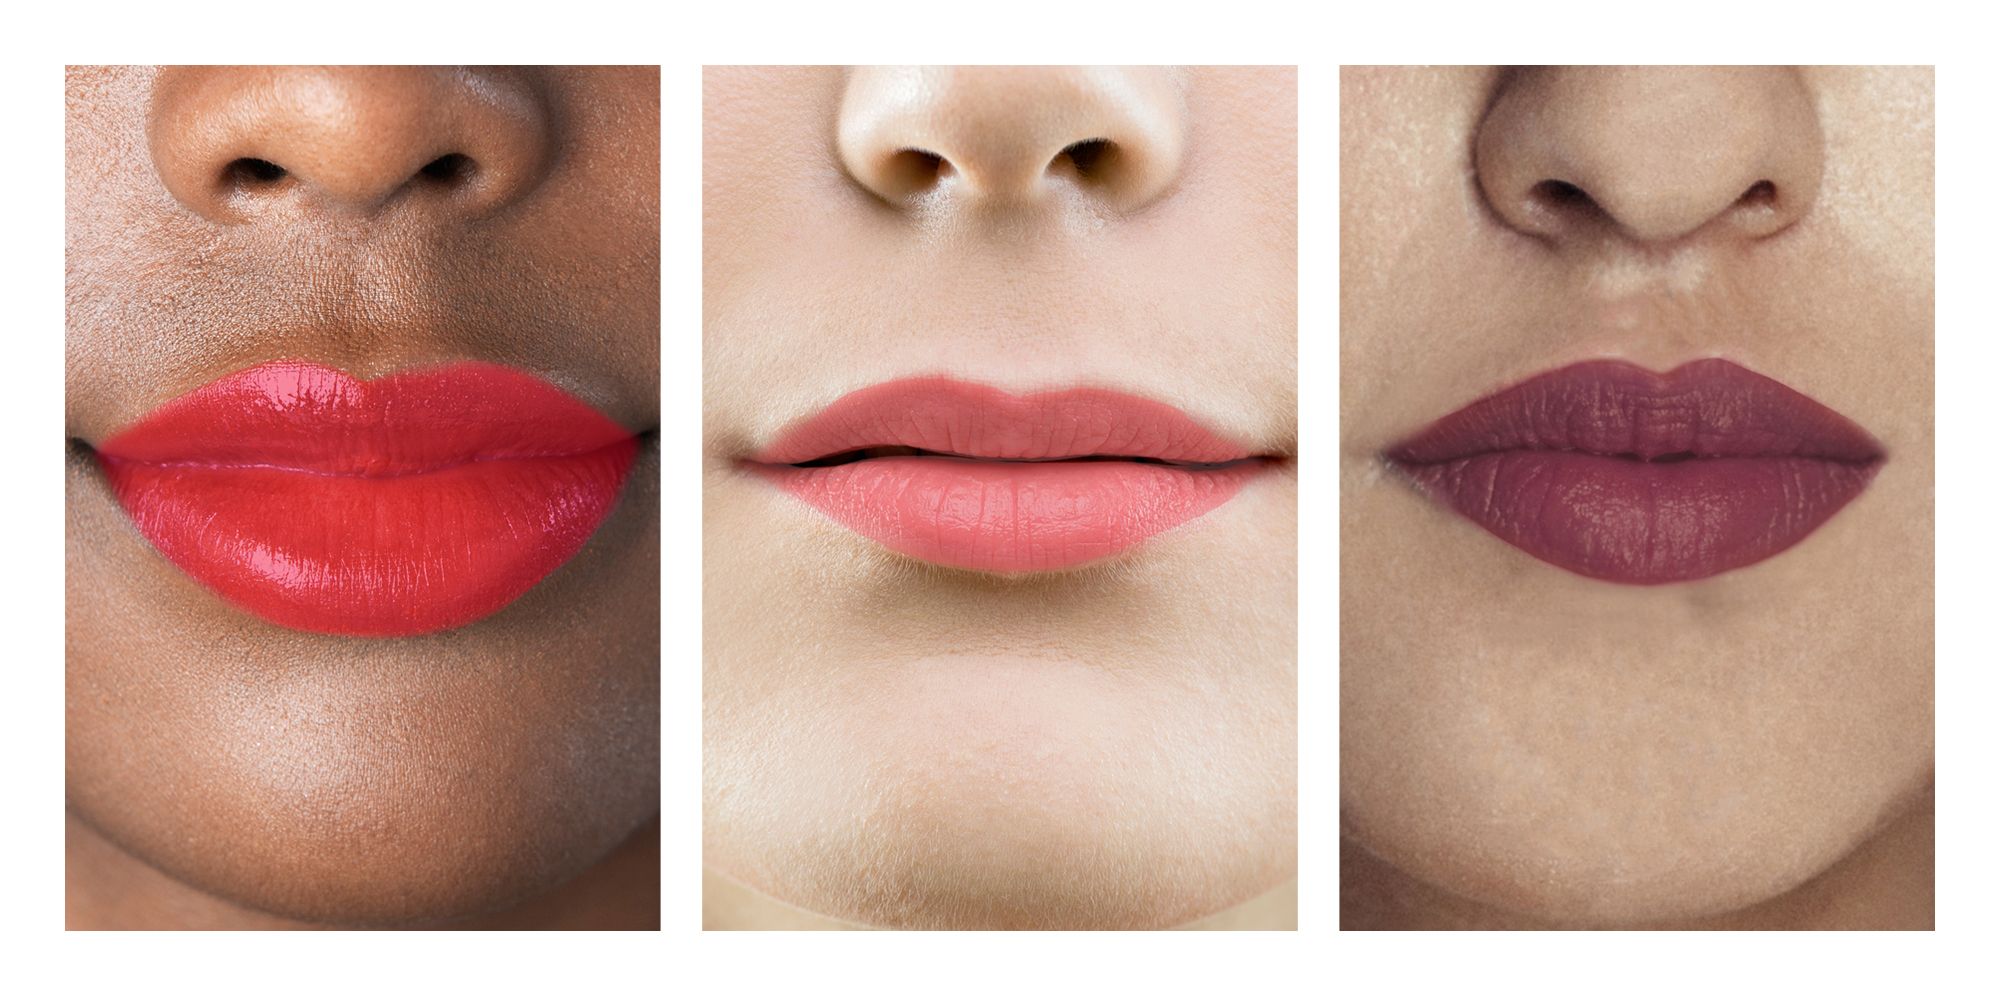 tellen is genoeg comfortabel 15 Best Matte Lipstick Colors - Top Matte Lip Gloss, Pencil, and Liquid